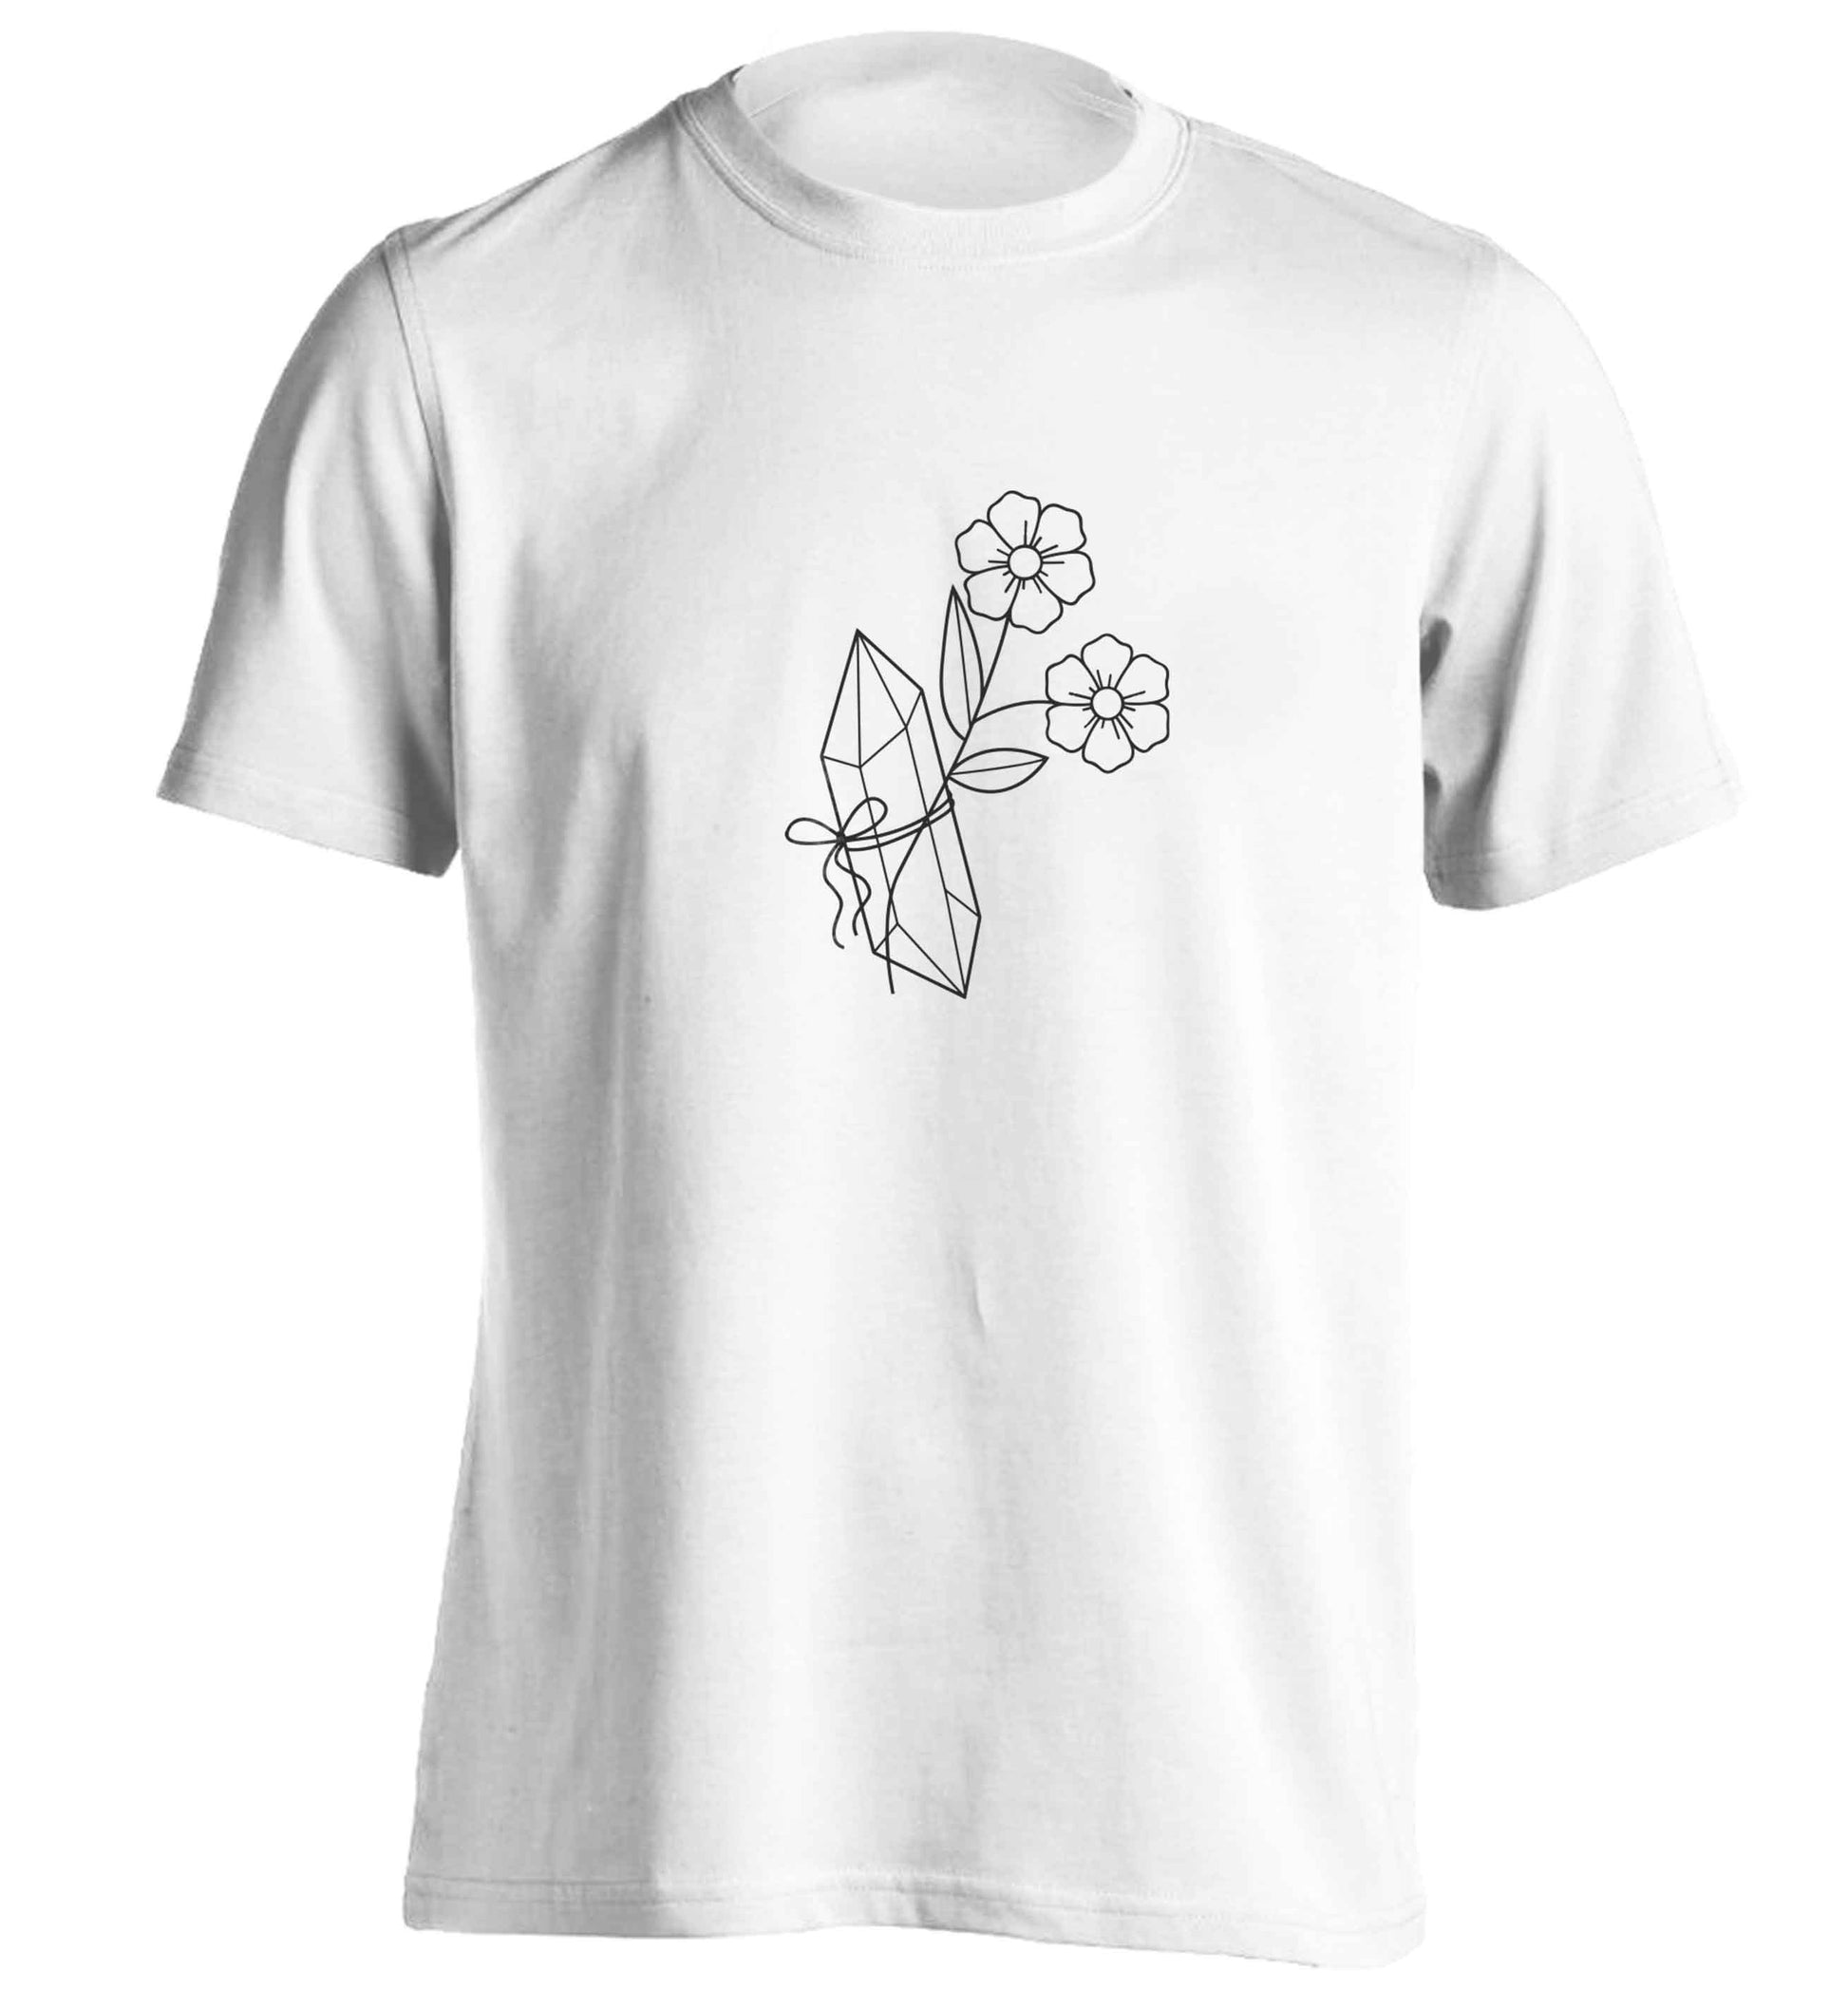 Crystal flower illustration adults unisex white Tshirt 2XL